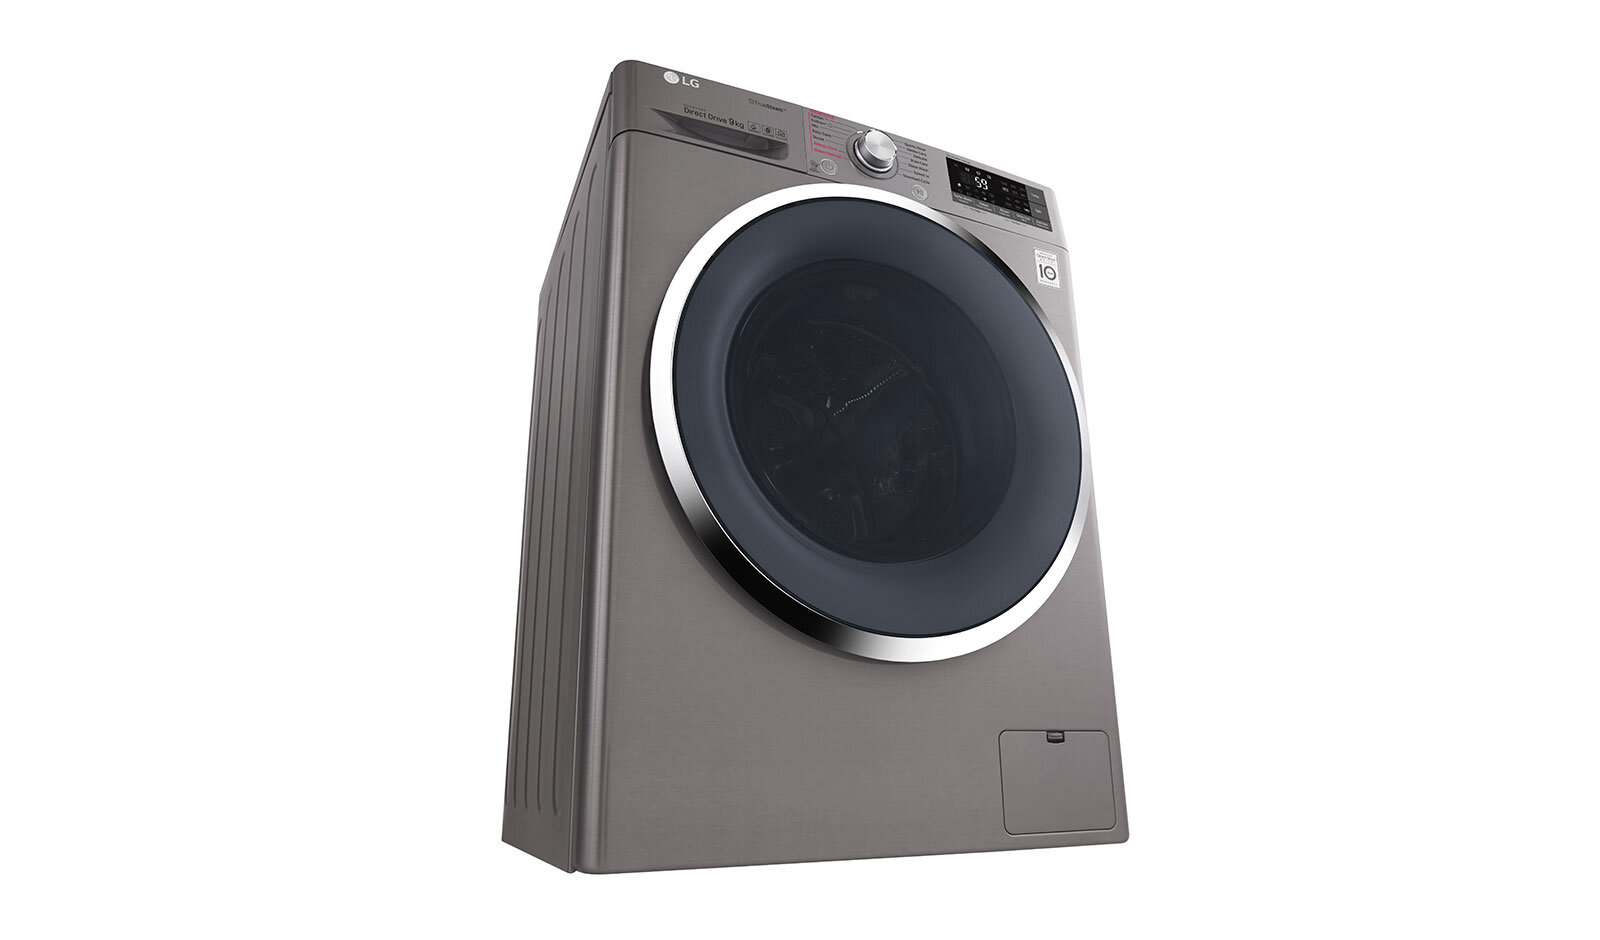  Máy giặt cửa ngang LG 9kg FC1409S2E